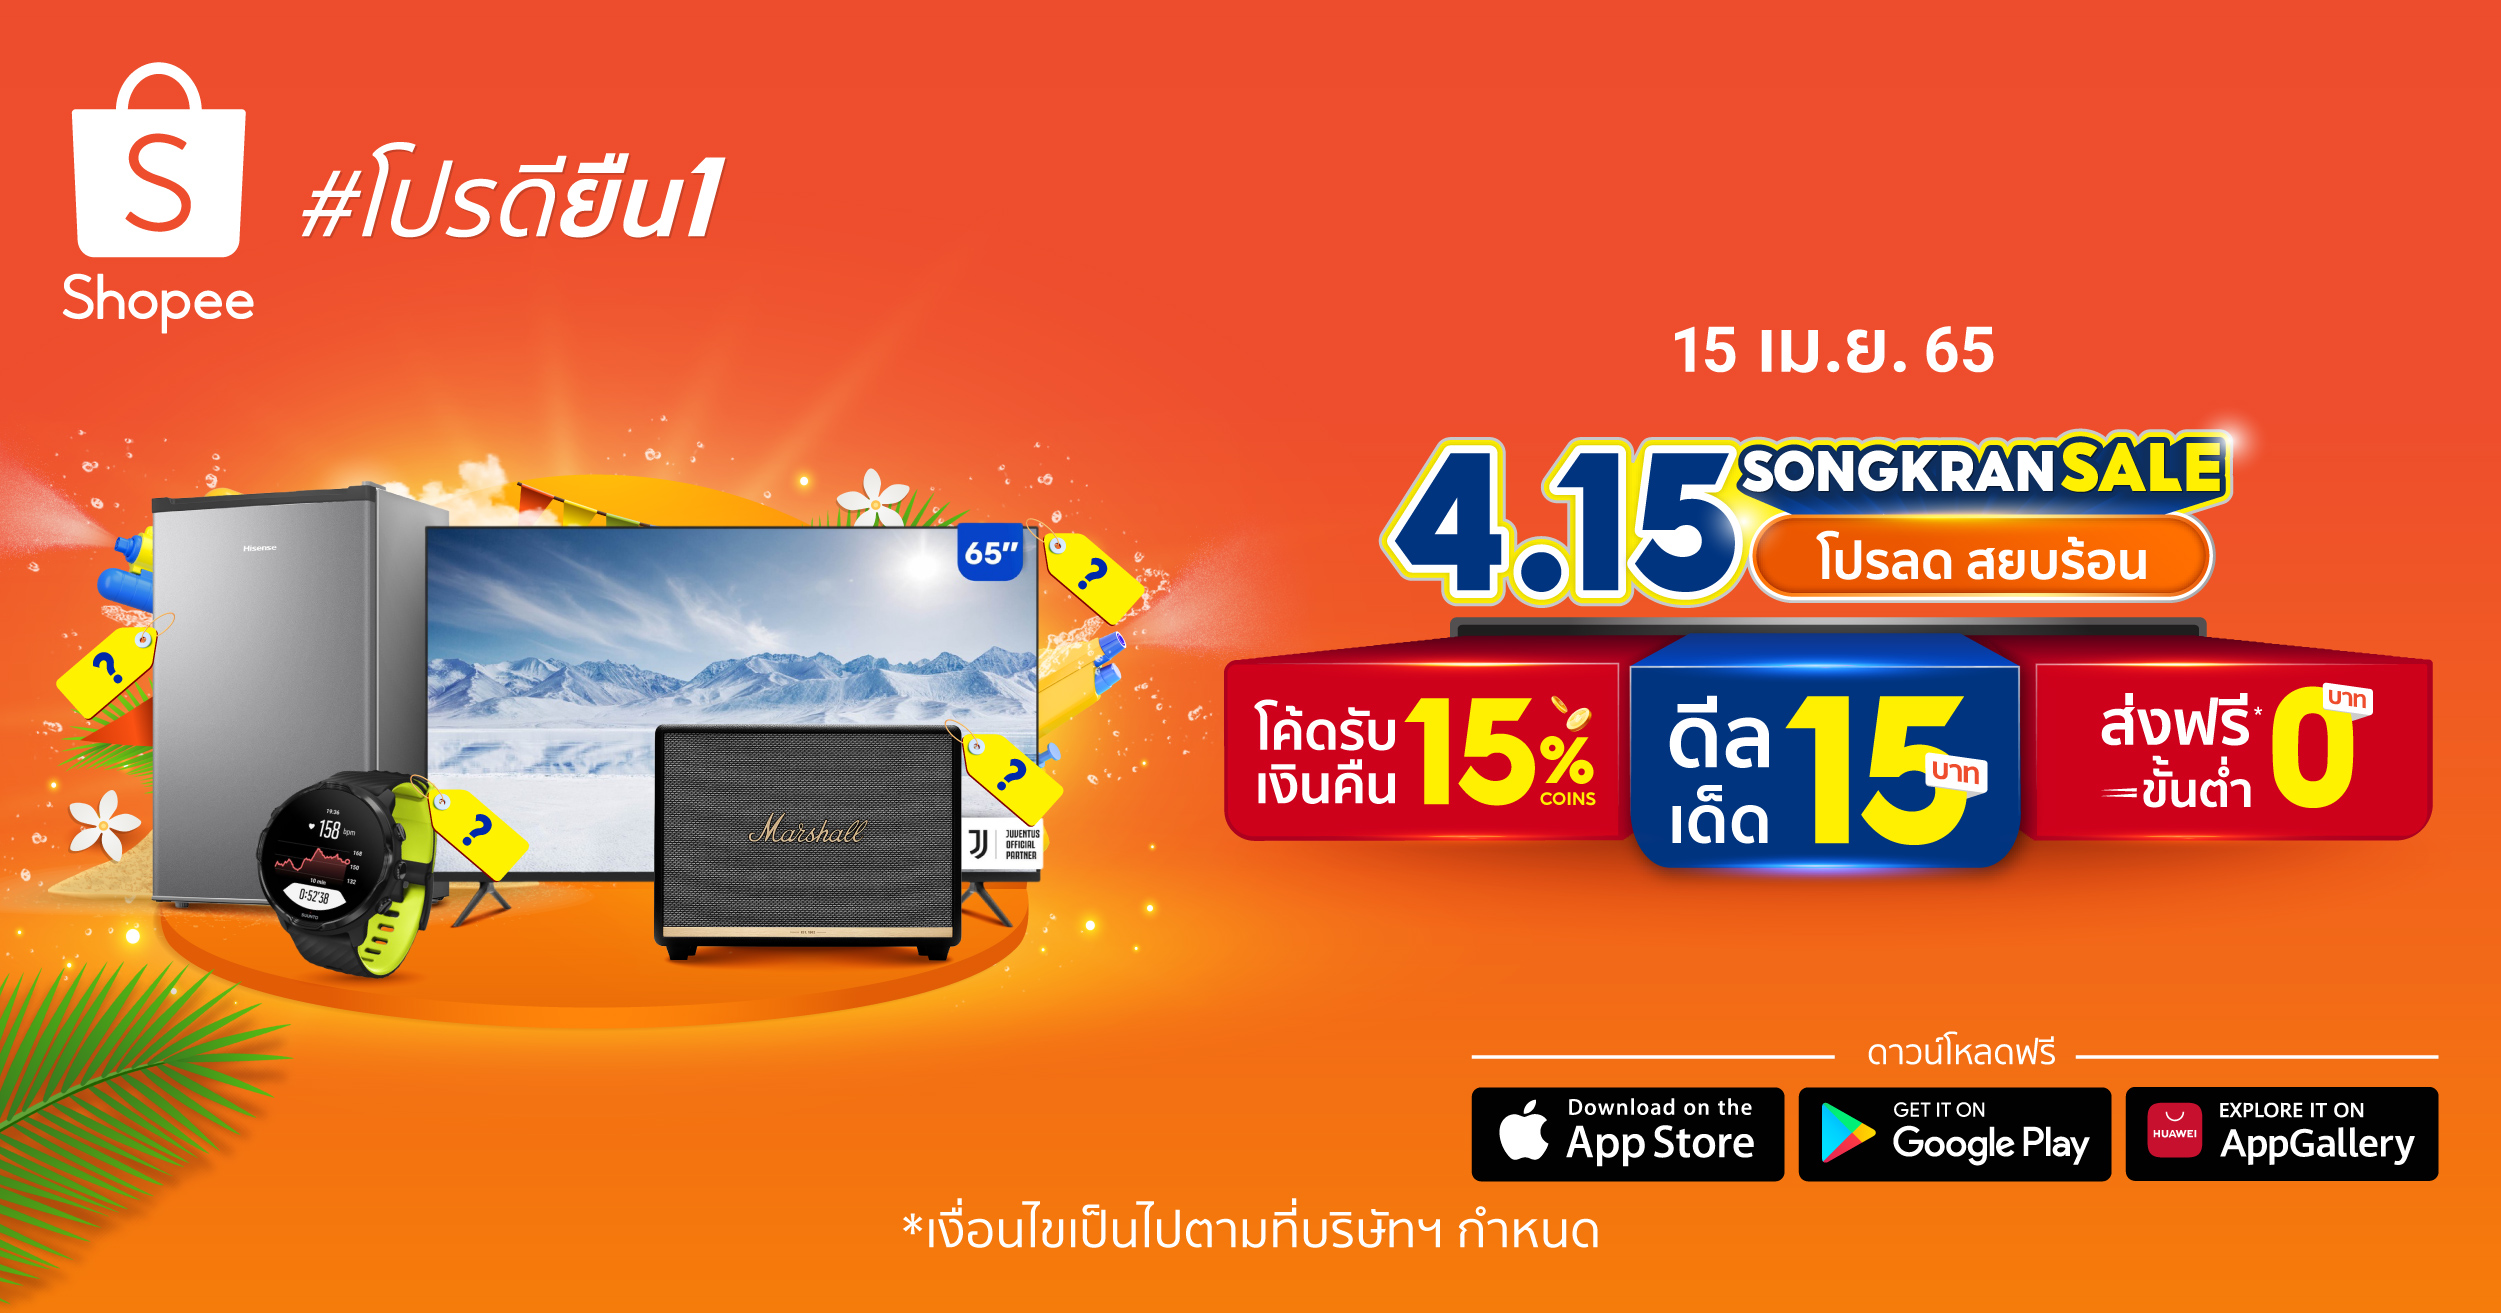 Shopee Shopee 4.15 Songkran Sale